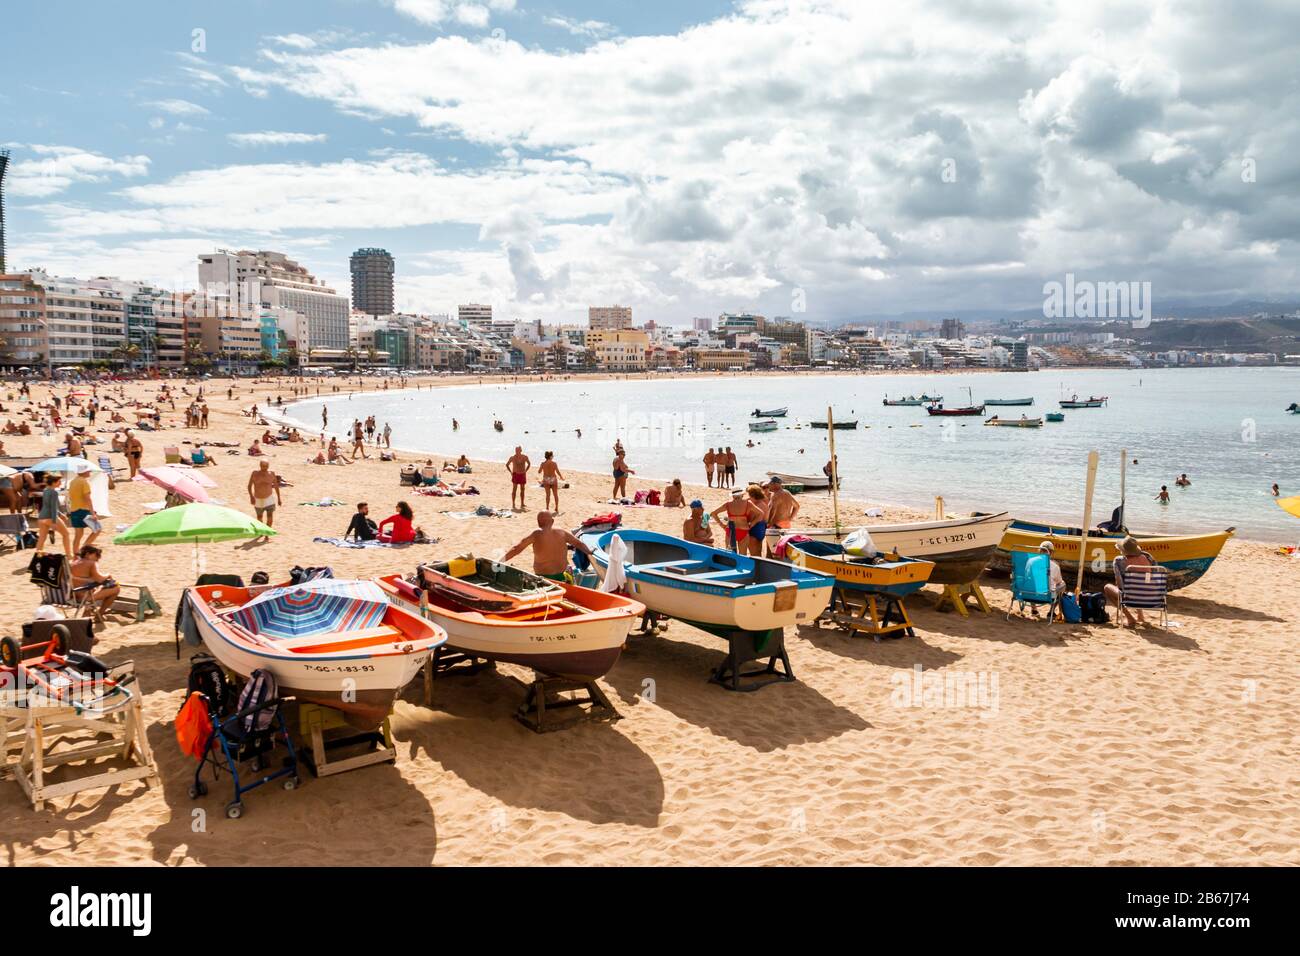 LAS PALMAS, GRAN CANARIA ISLAND, SPAIN - JAN 2020: People swimming and relax in the Playa de las Canteras Stock Photo